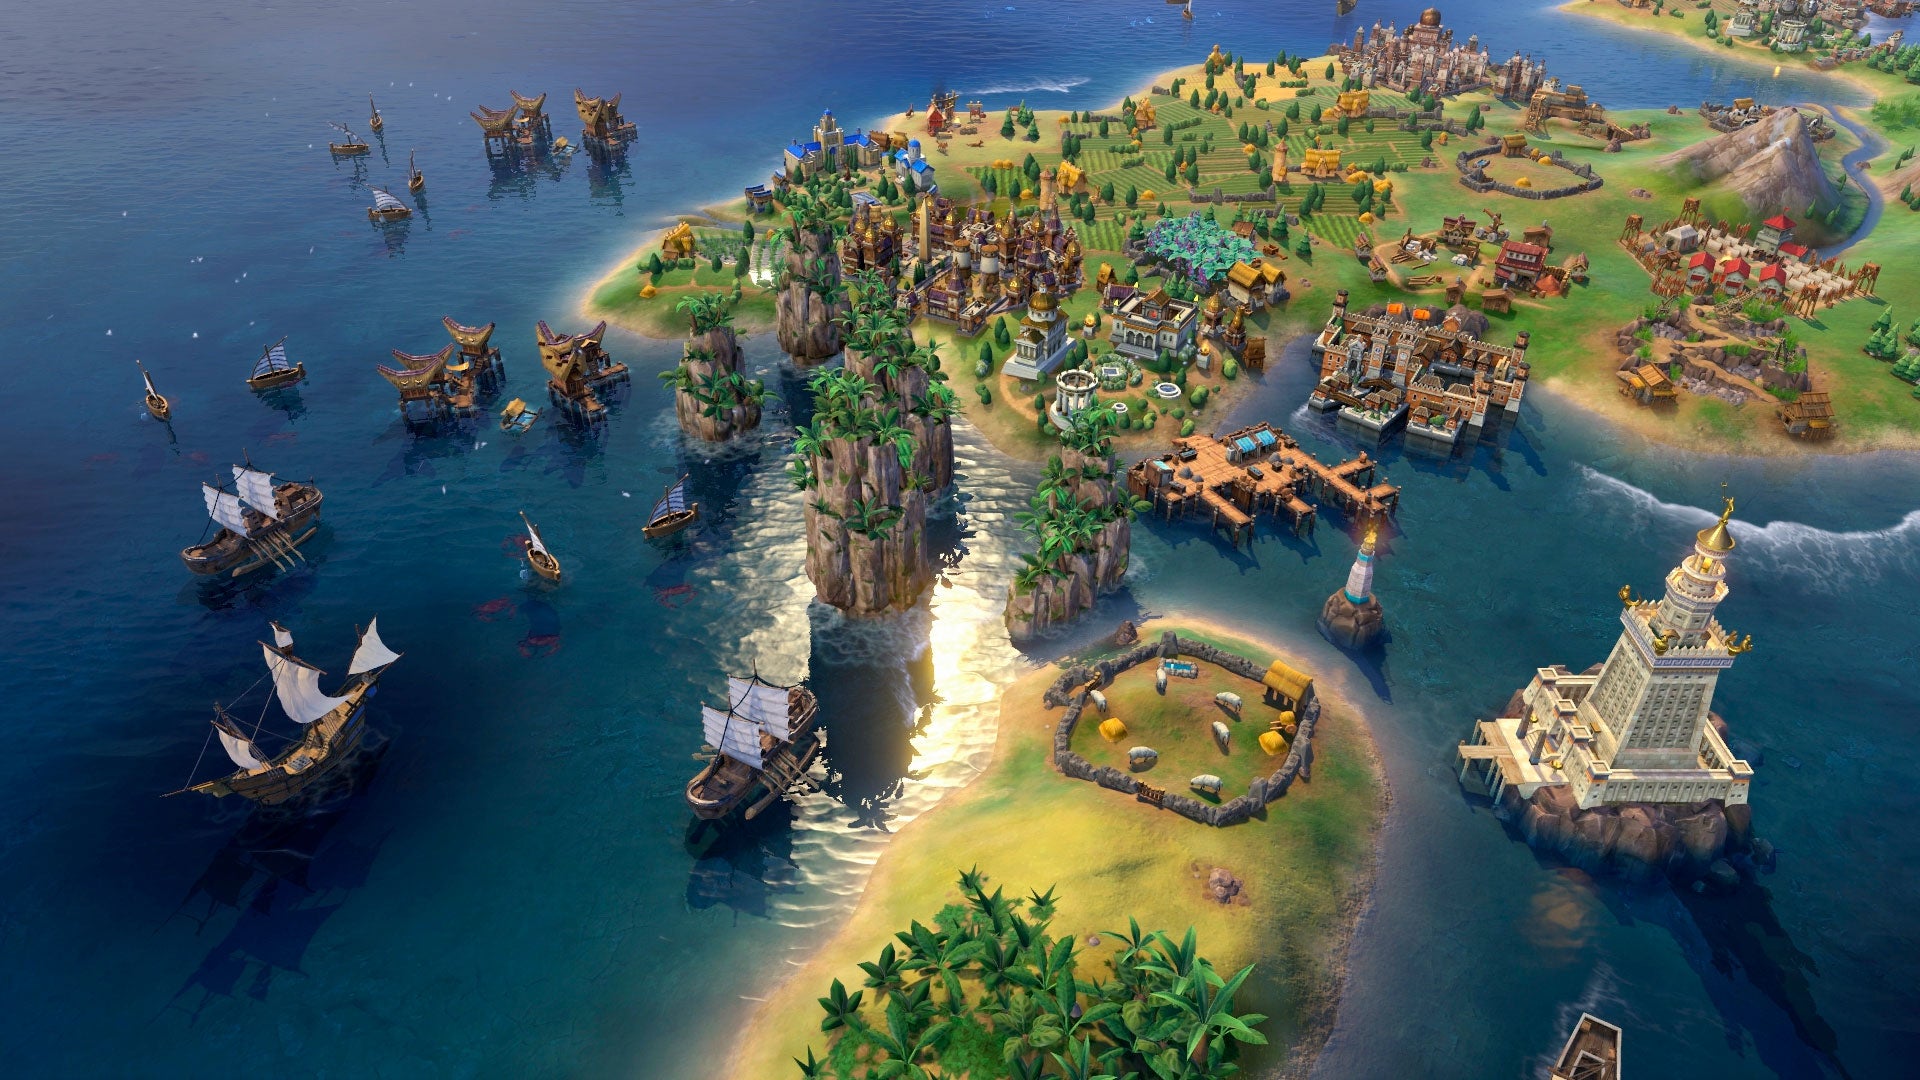 Civilization VI - Khmer and Indonesia Civilization & Scenario Pack DLC